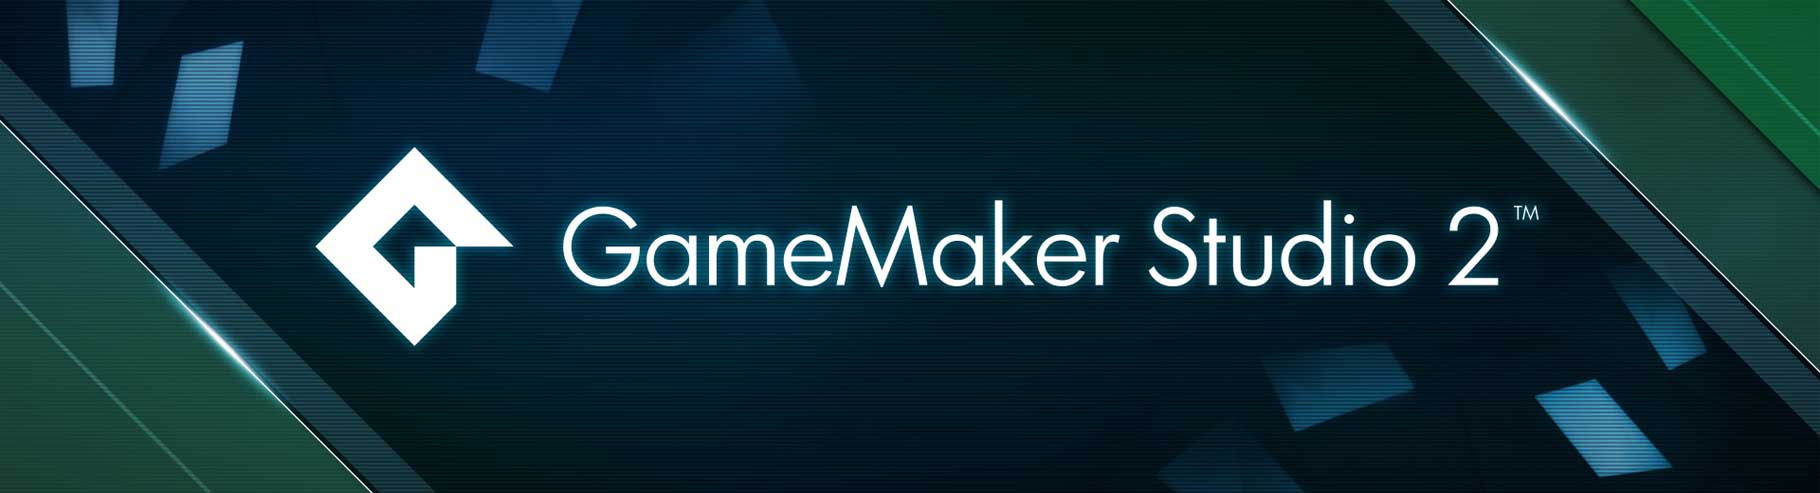 game maker studio 2 marketplace